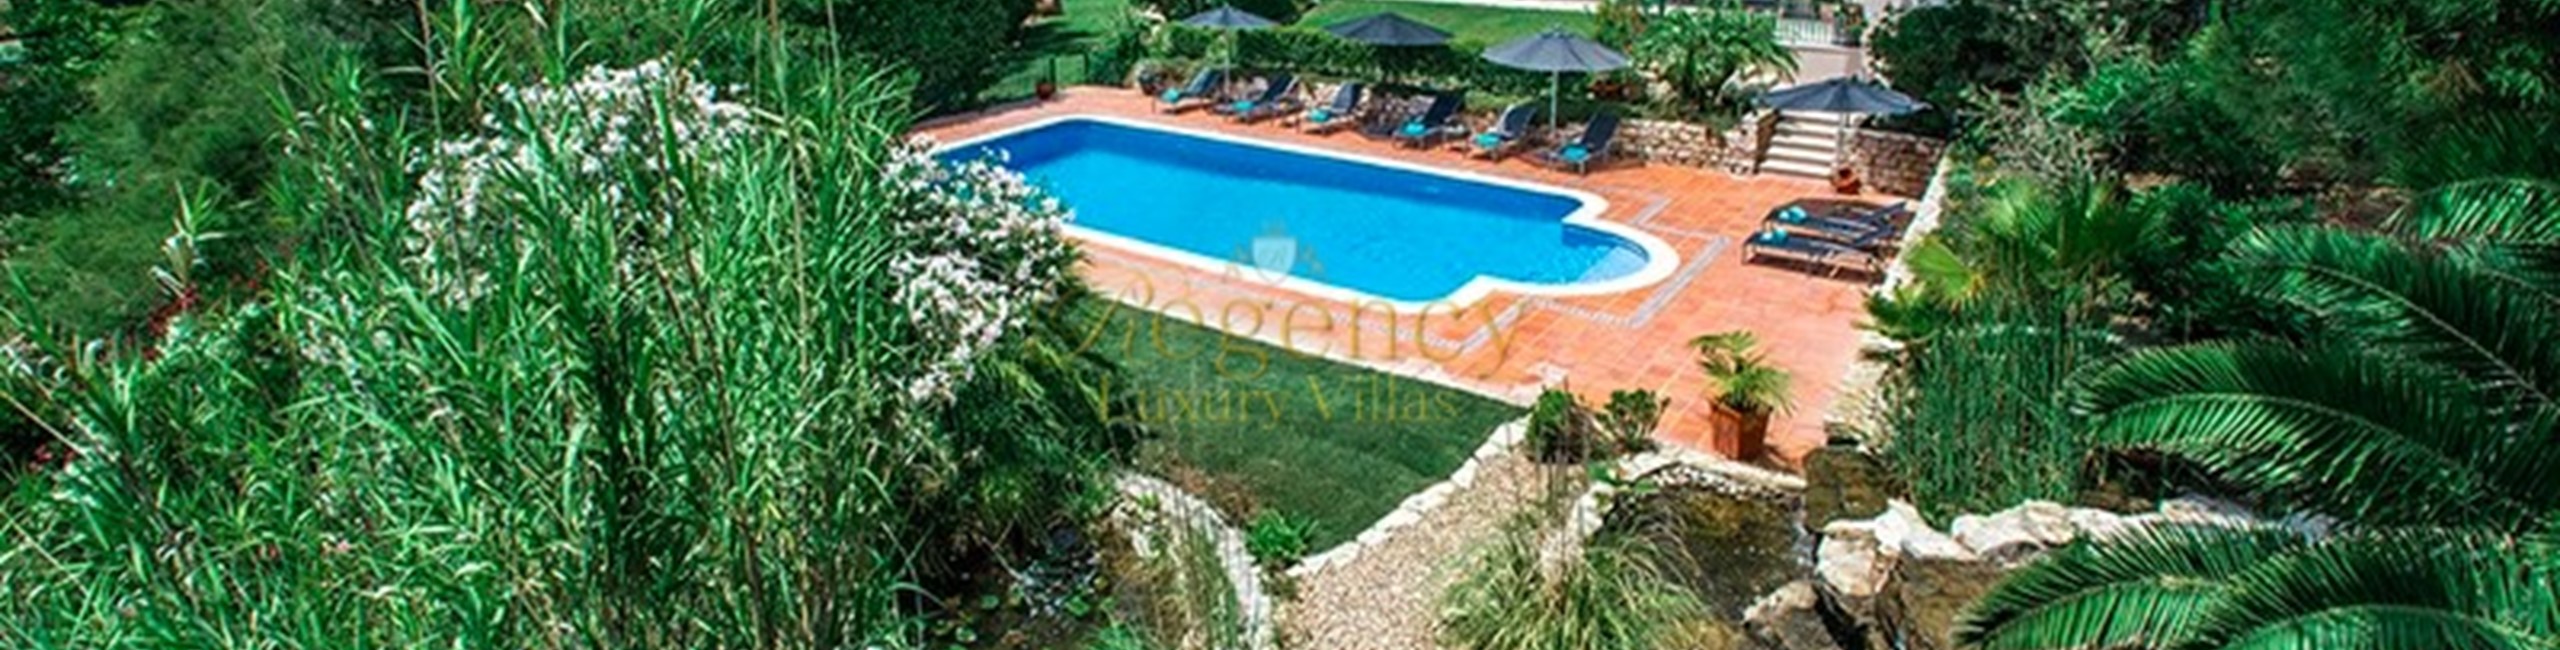 Private 5 Bedroom Villa To Rent In Quinta Do Lago Portugal Algarve